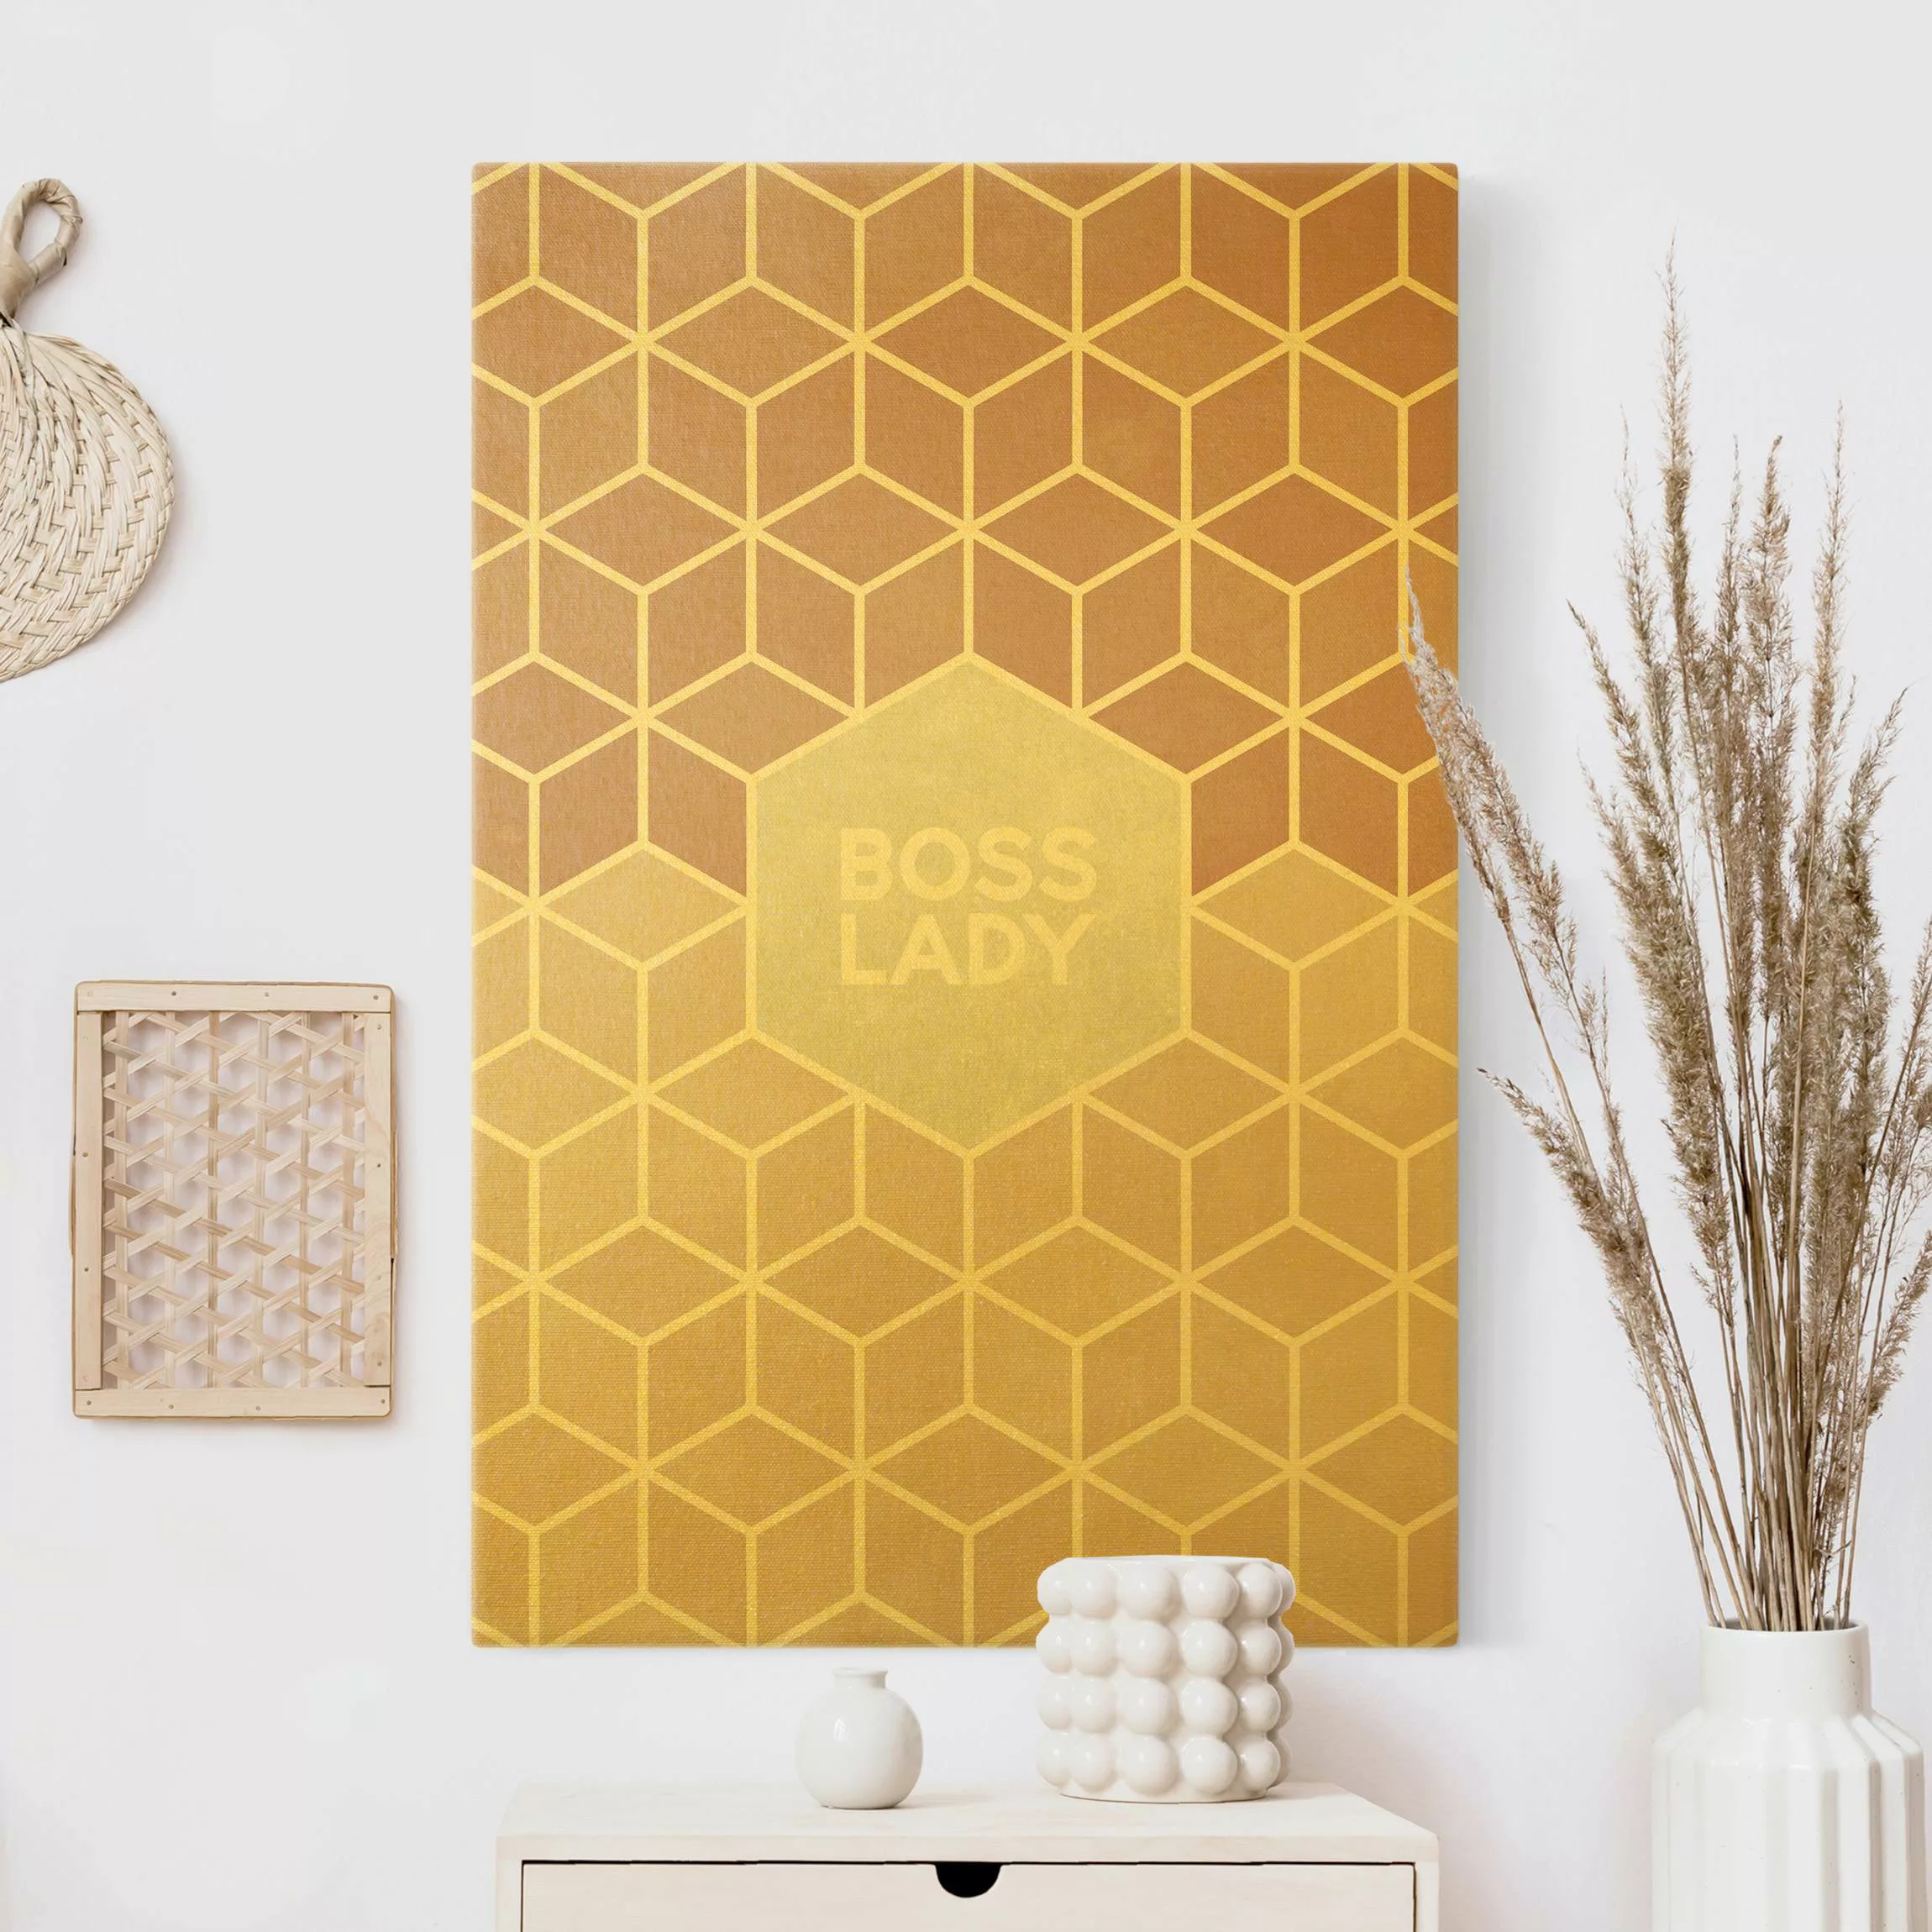 Leinwandbild Gold Goldene Geometrie - Boss Lady Sechsecke Rosa günstig online kaufen